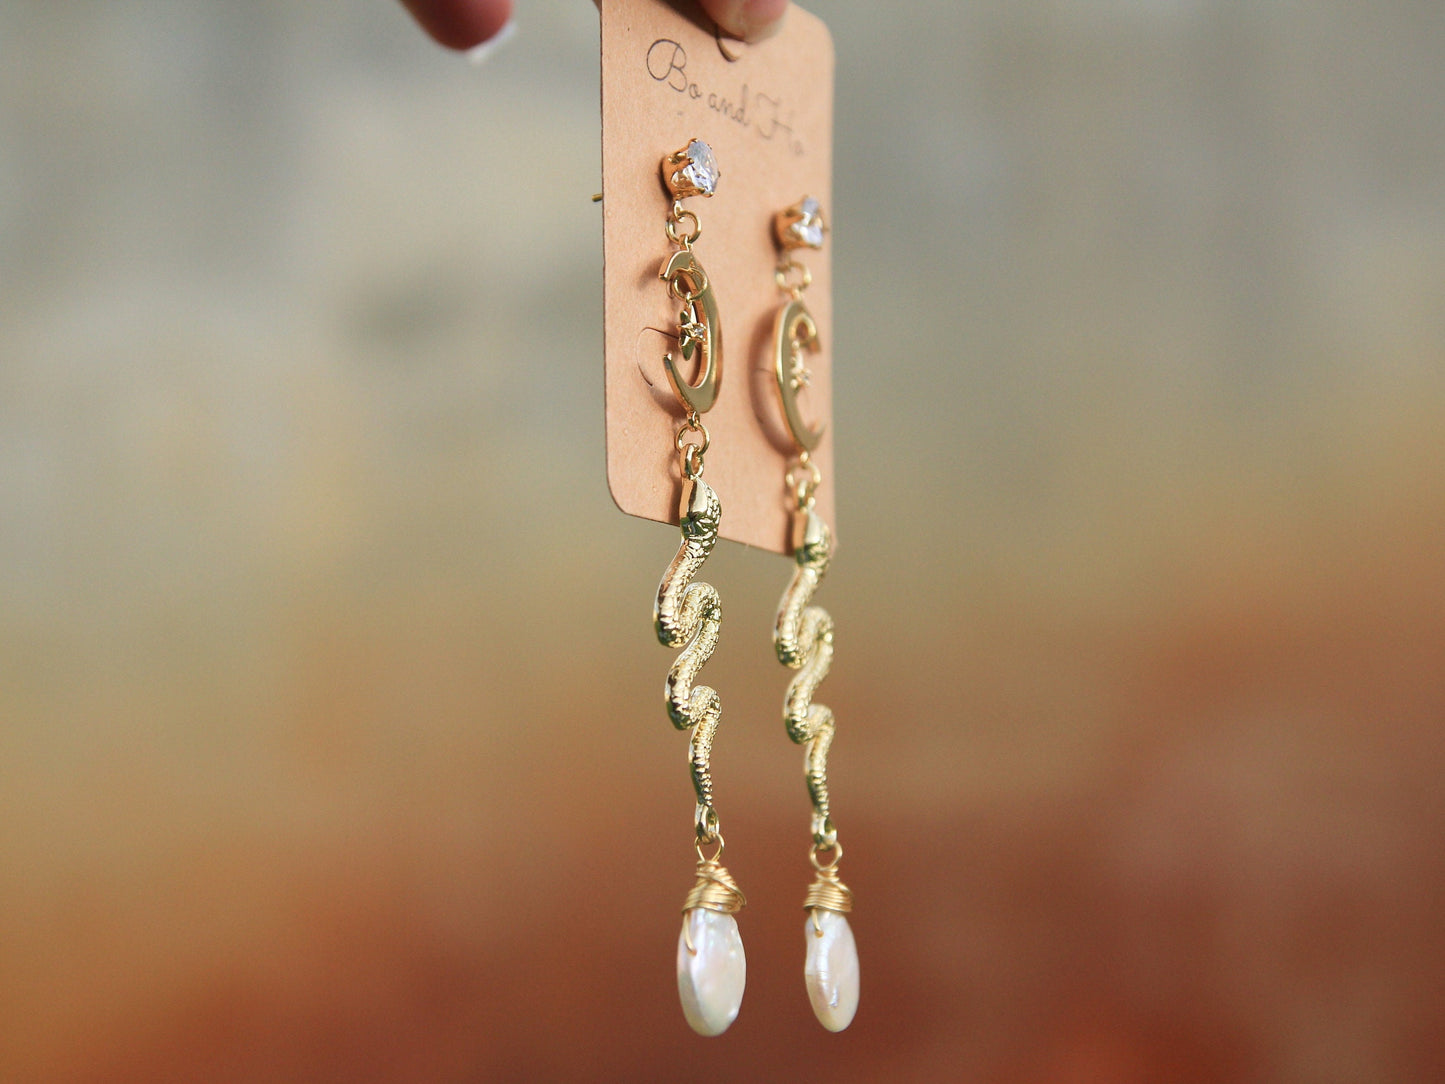 Celestial Snake Earrings with Large Genuine Pearls